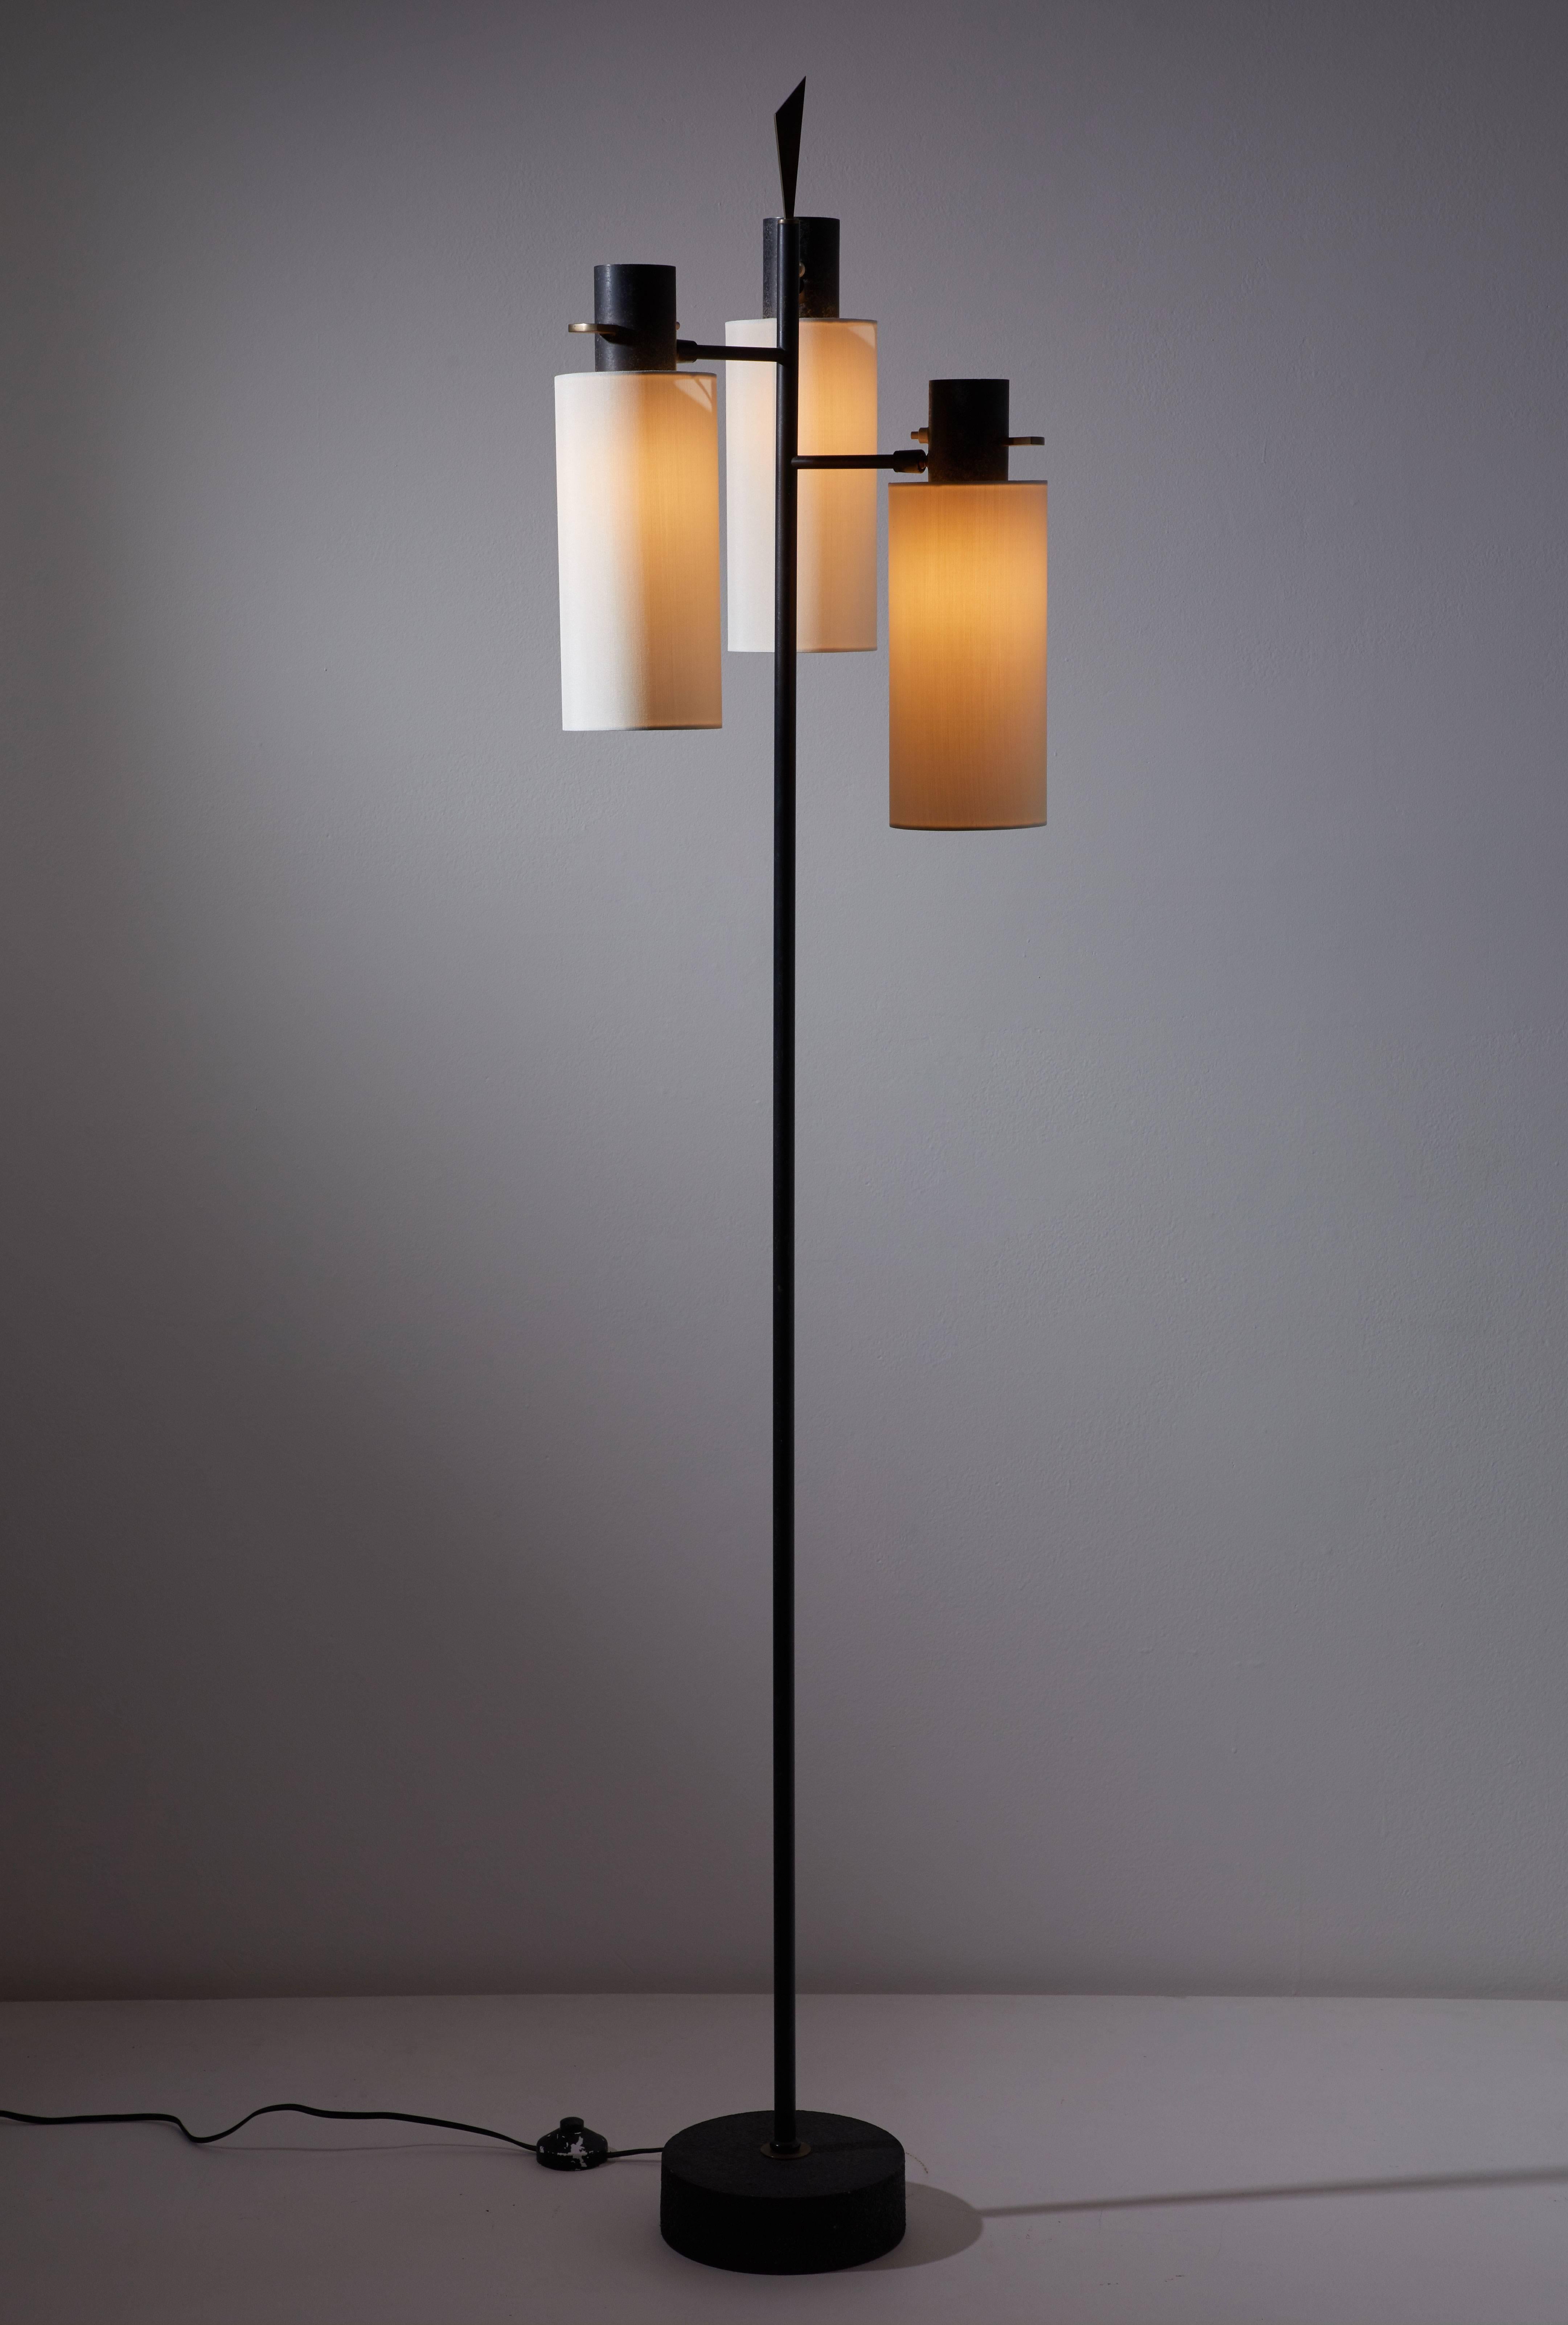 Mid-Century Modern Floor Lamp by Lunel